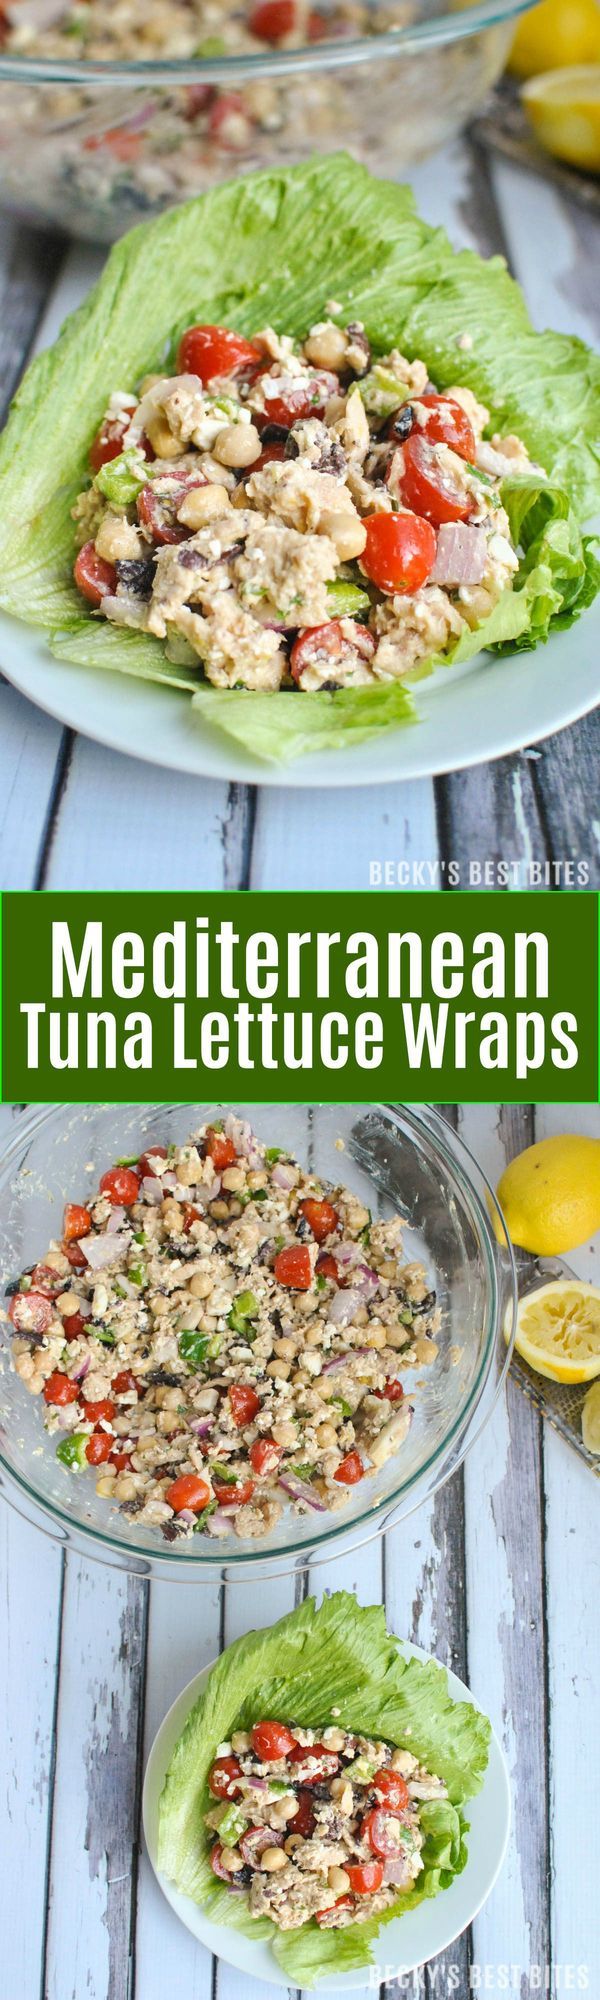 Mediterranean Tuna Lettuce Wraps